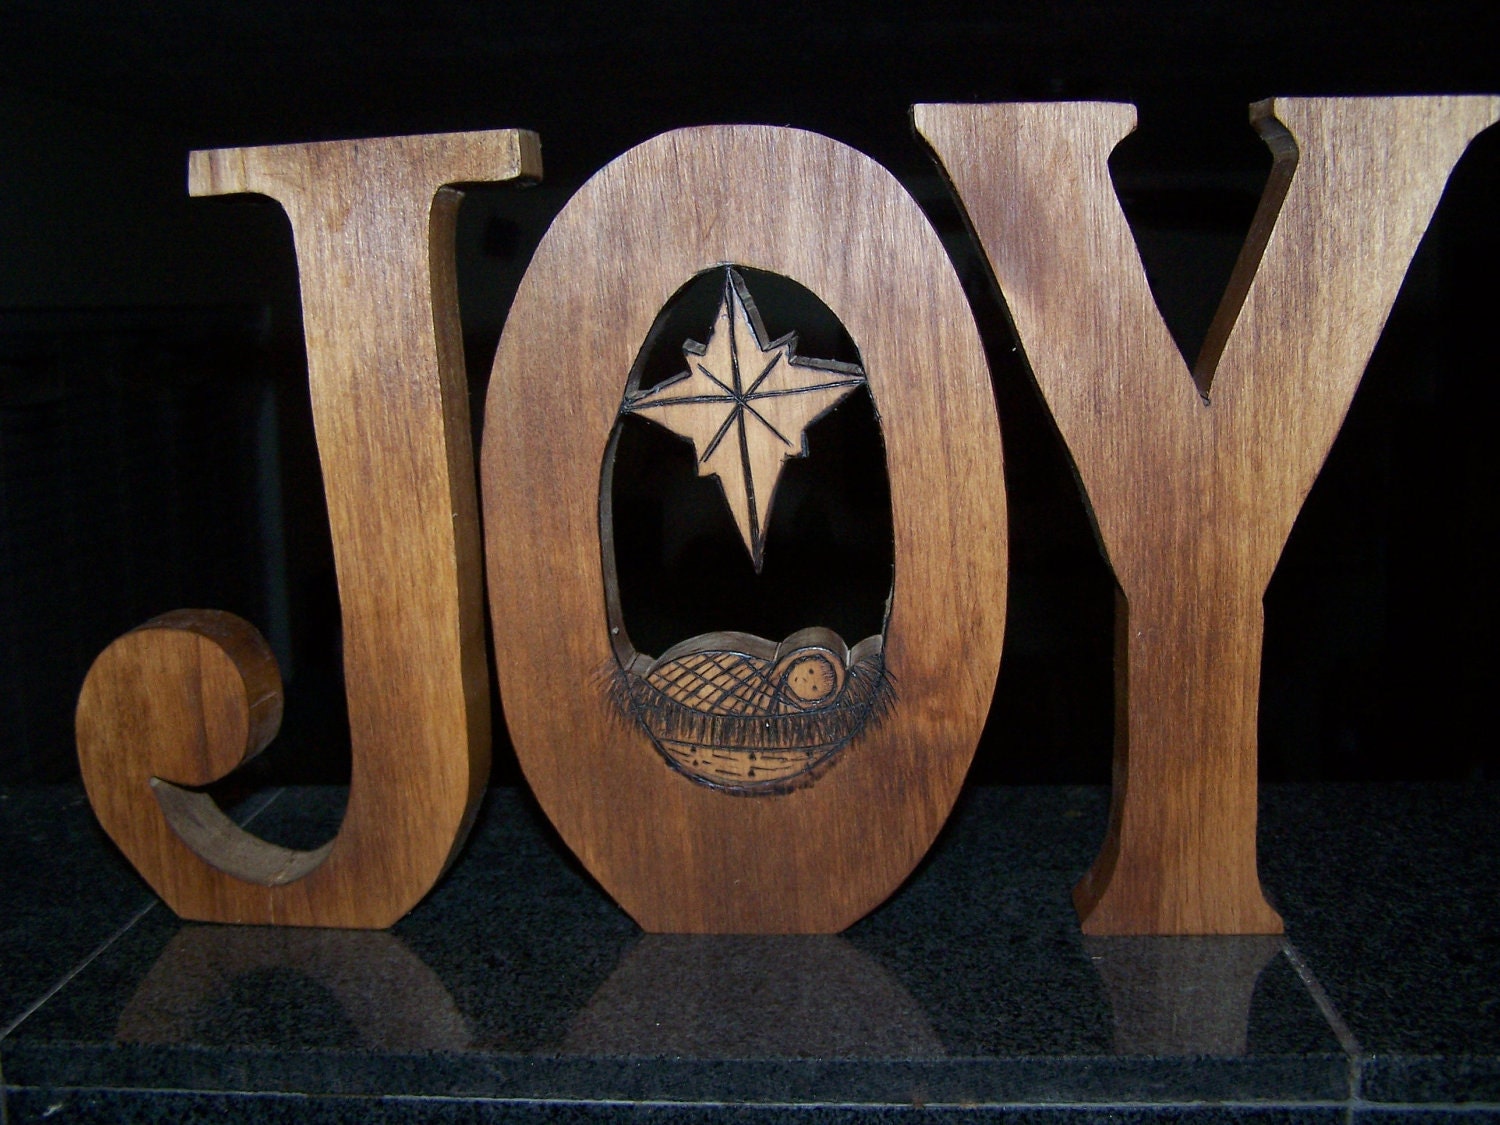 Joy with baby Jesus